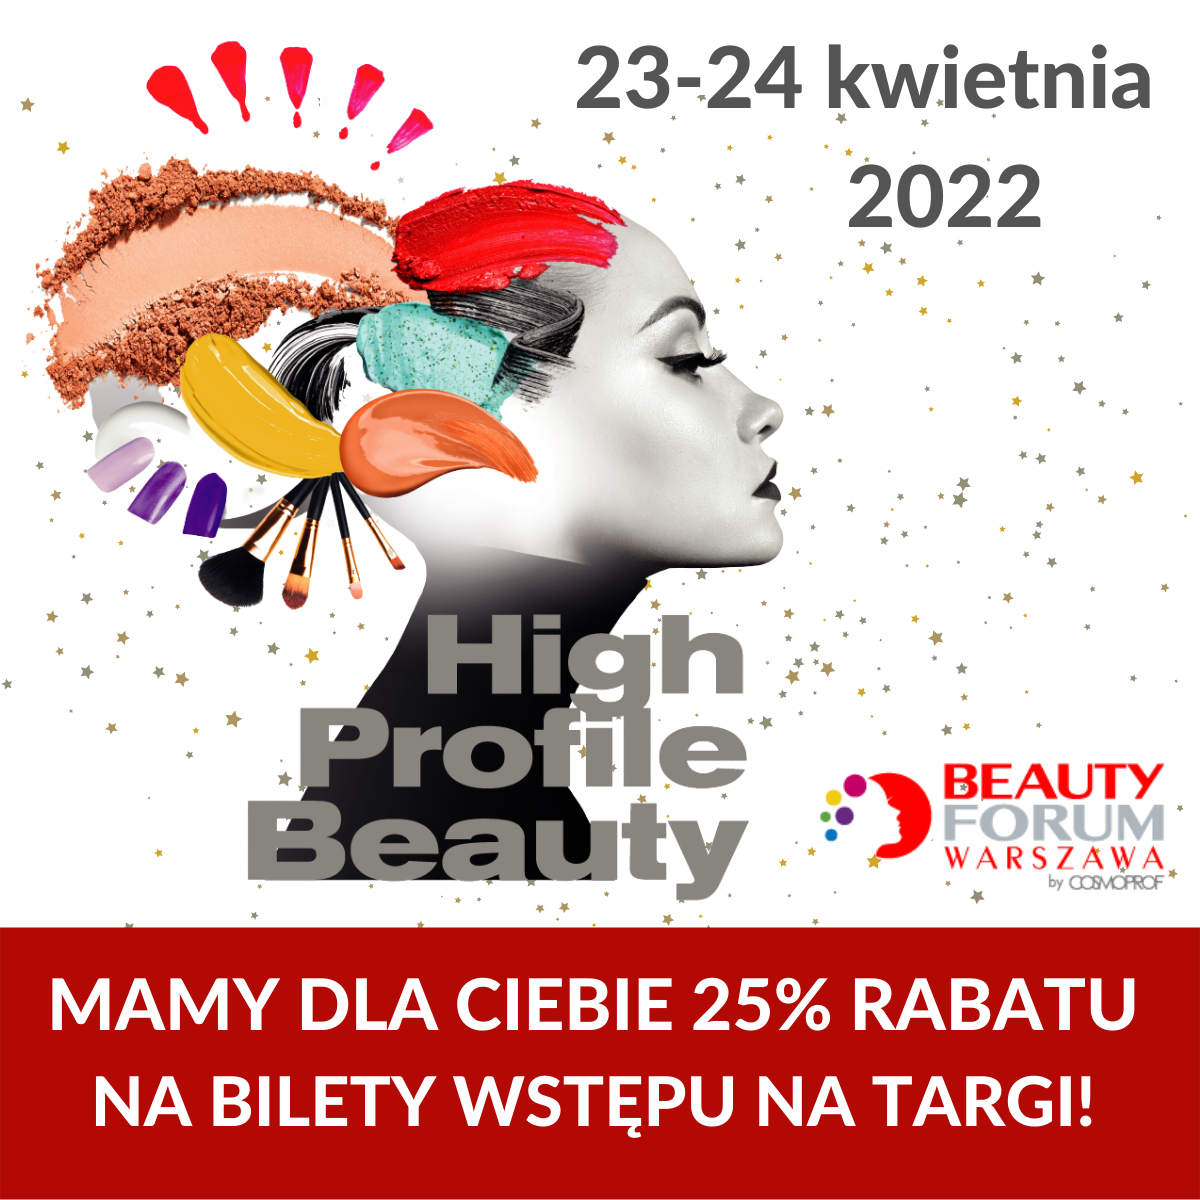 Kup wejściówkę na Targi Beauty Forum 2022